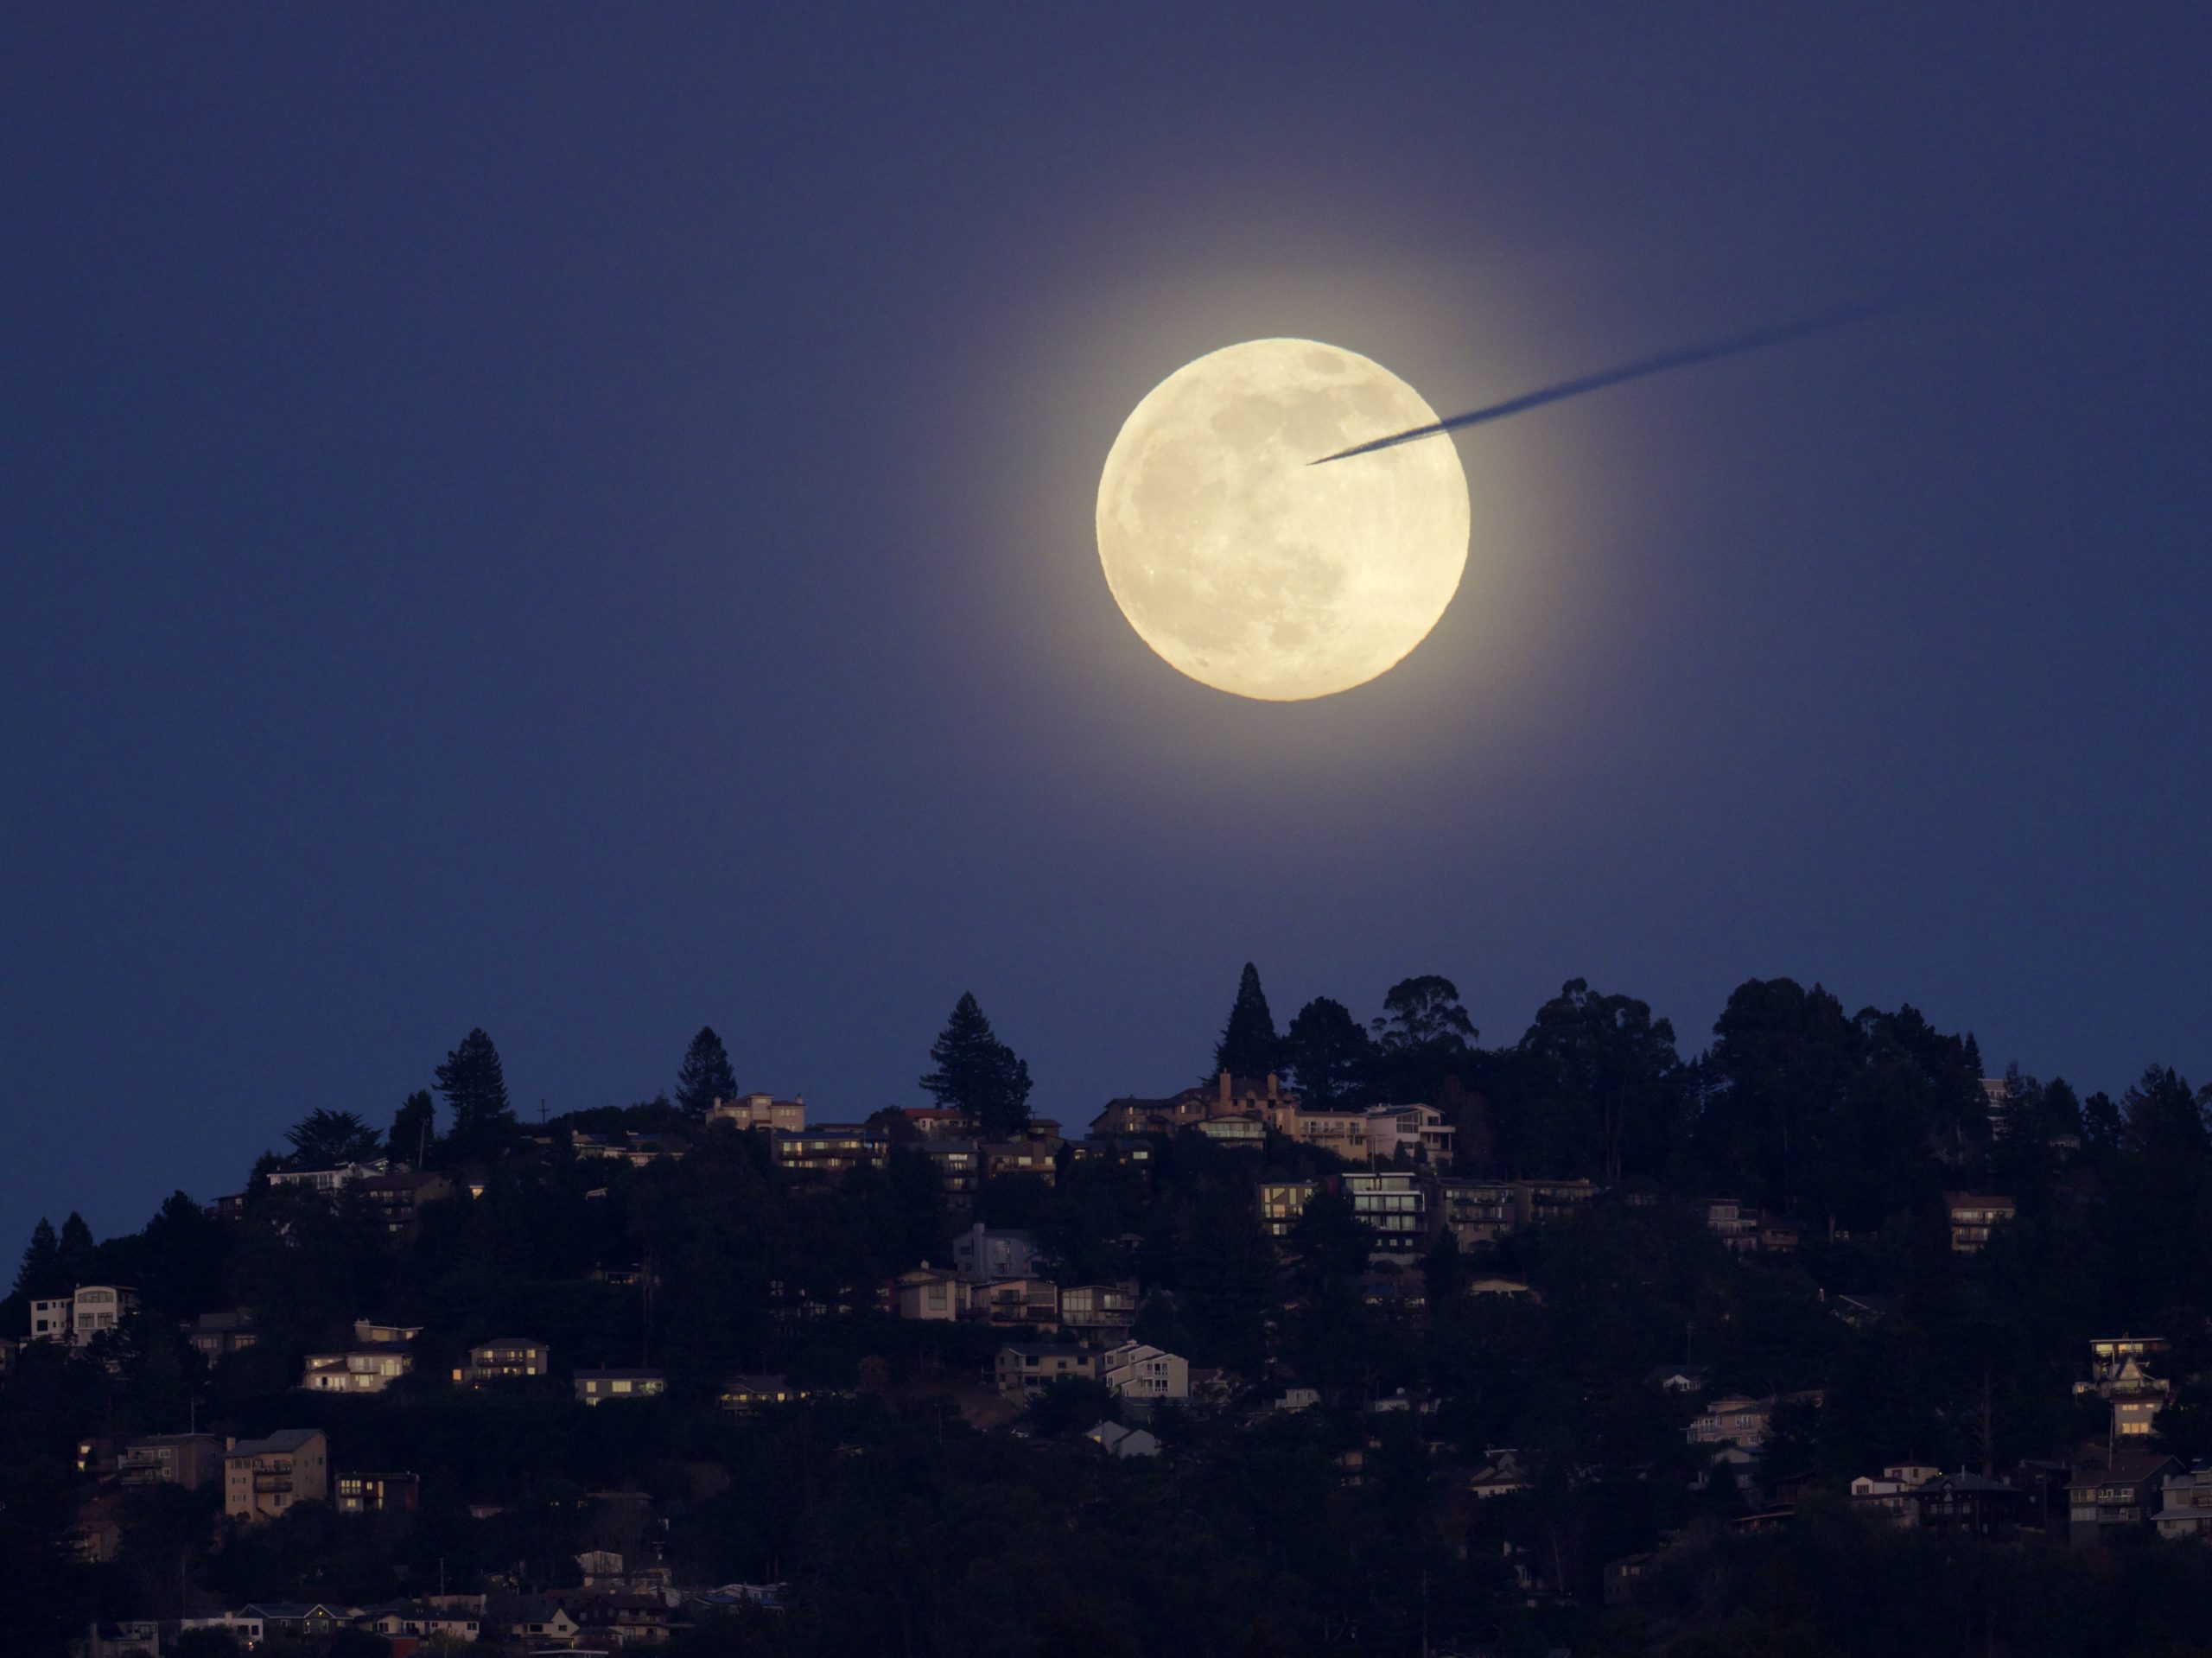 Last Full Moon of 2020 over Oakland, California